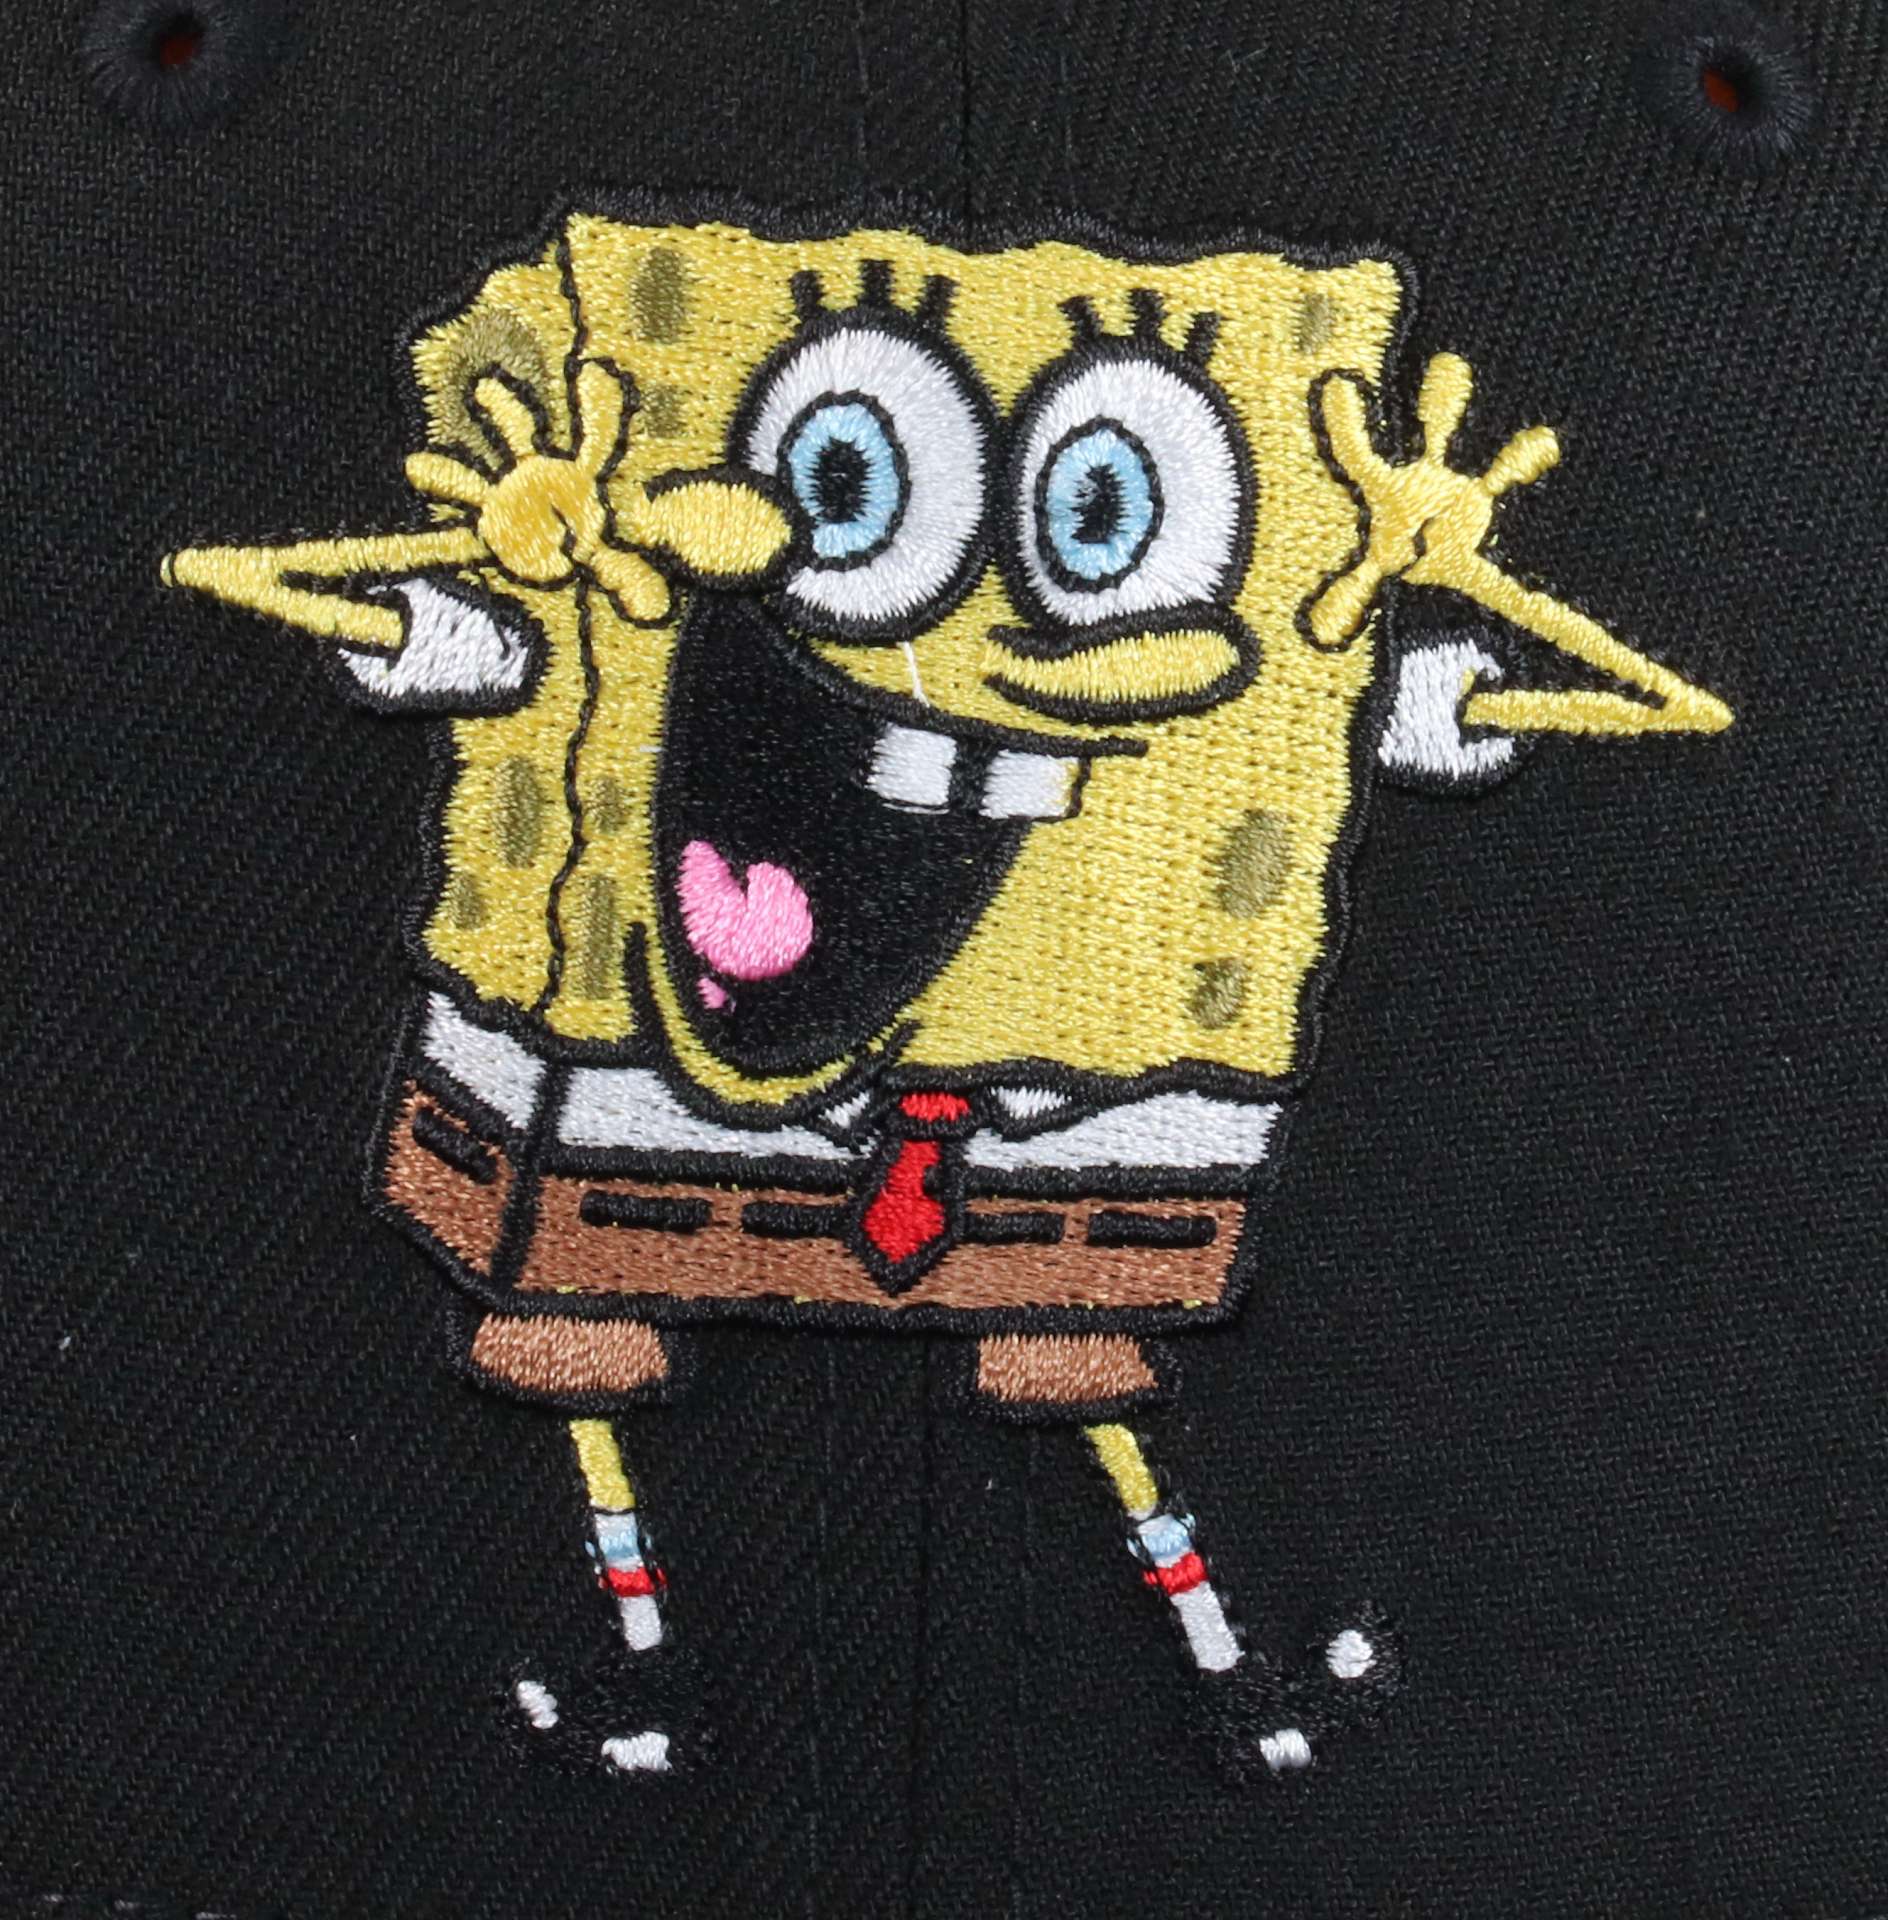 Spongebob Squarepants Spongebob Pose Black 9Fifty Snapback Cap New Era